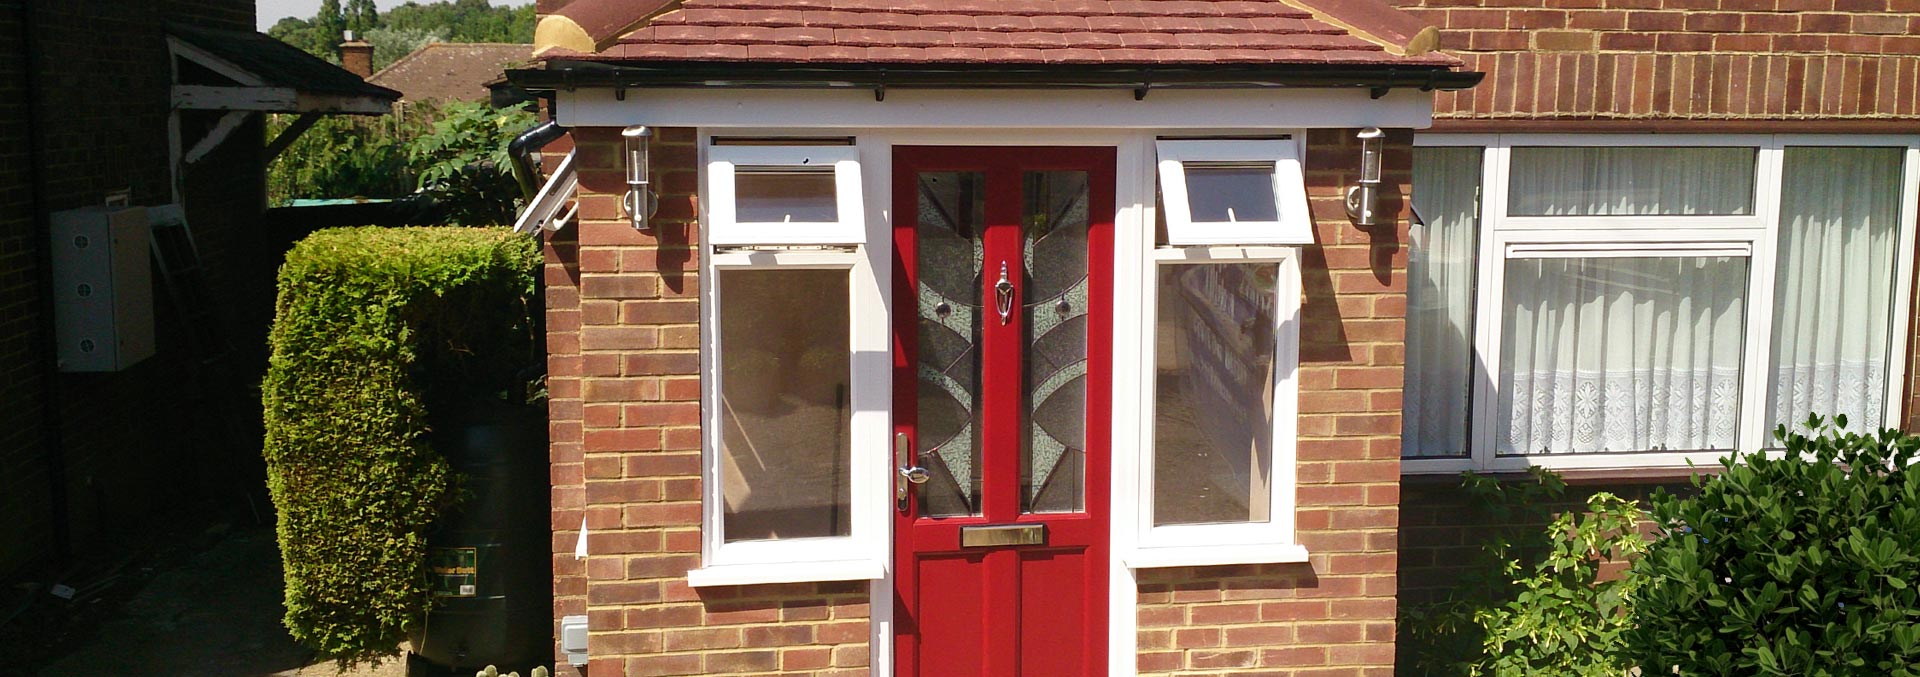 Brick porch installation with red door and casement windows